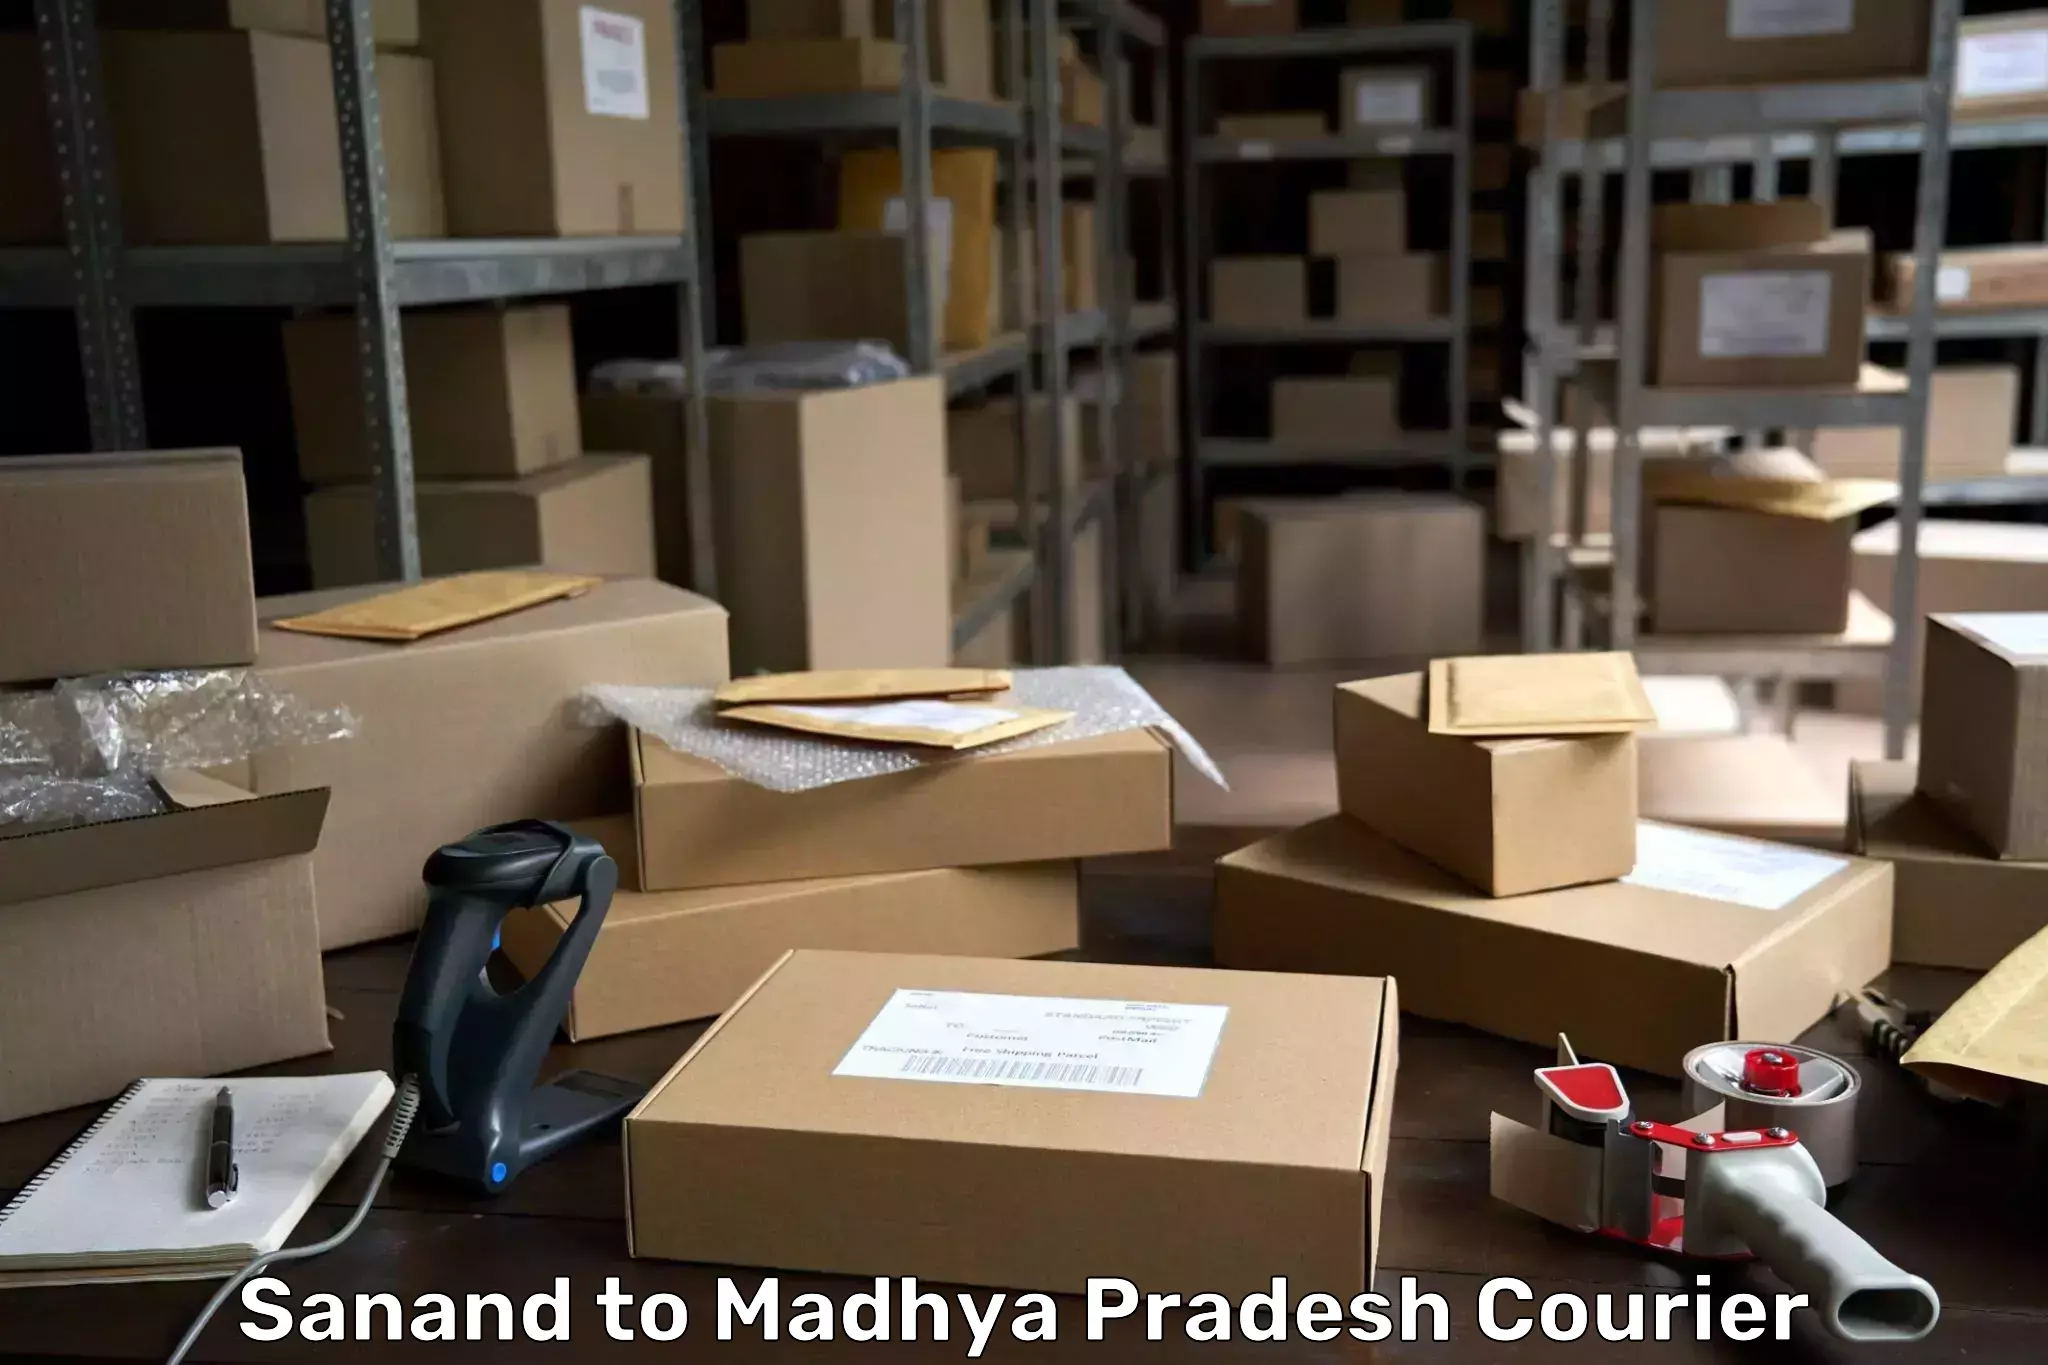 Digital courier platforms Sanand to Madhya Pradesh